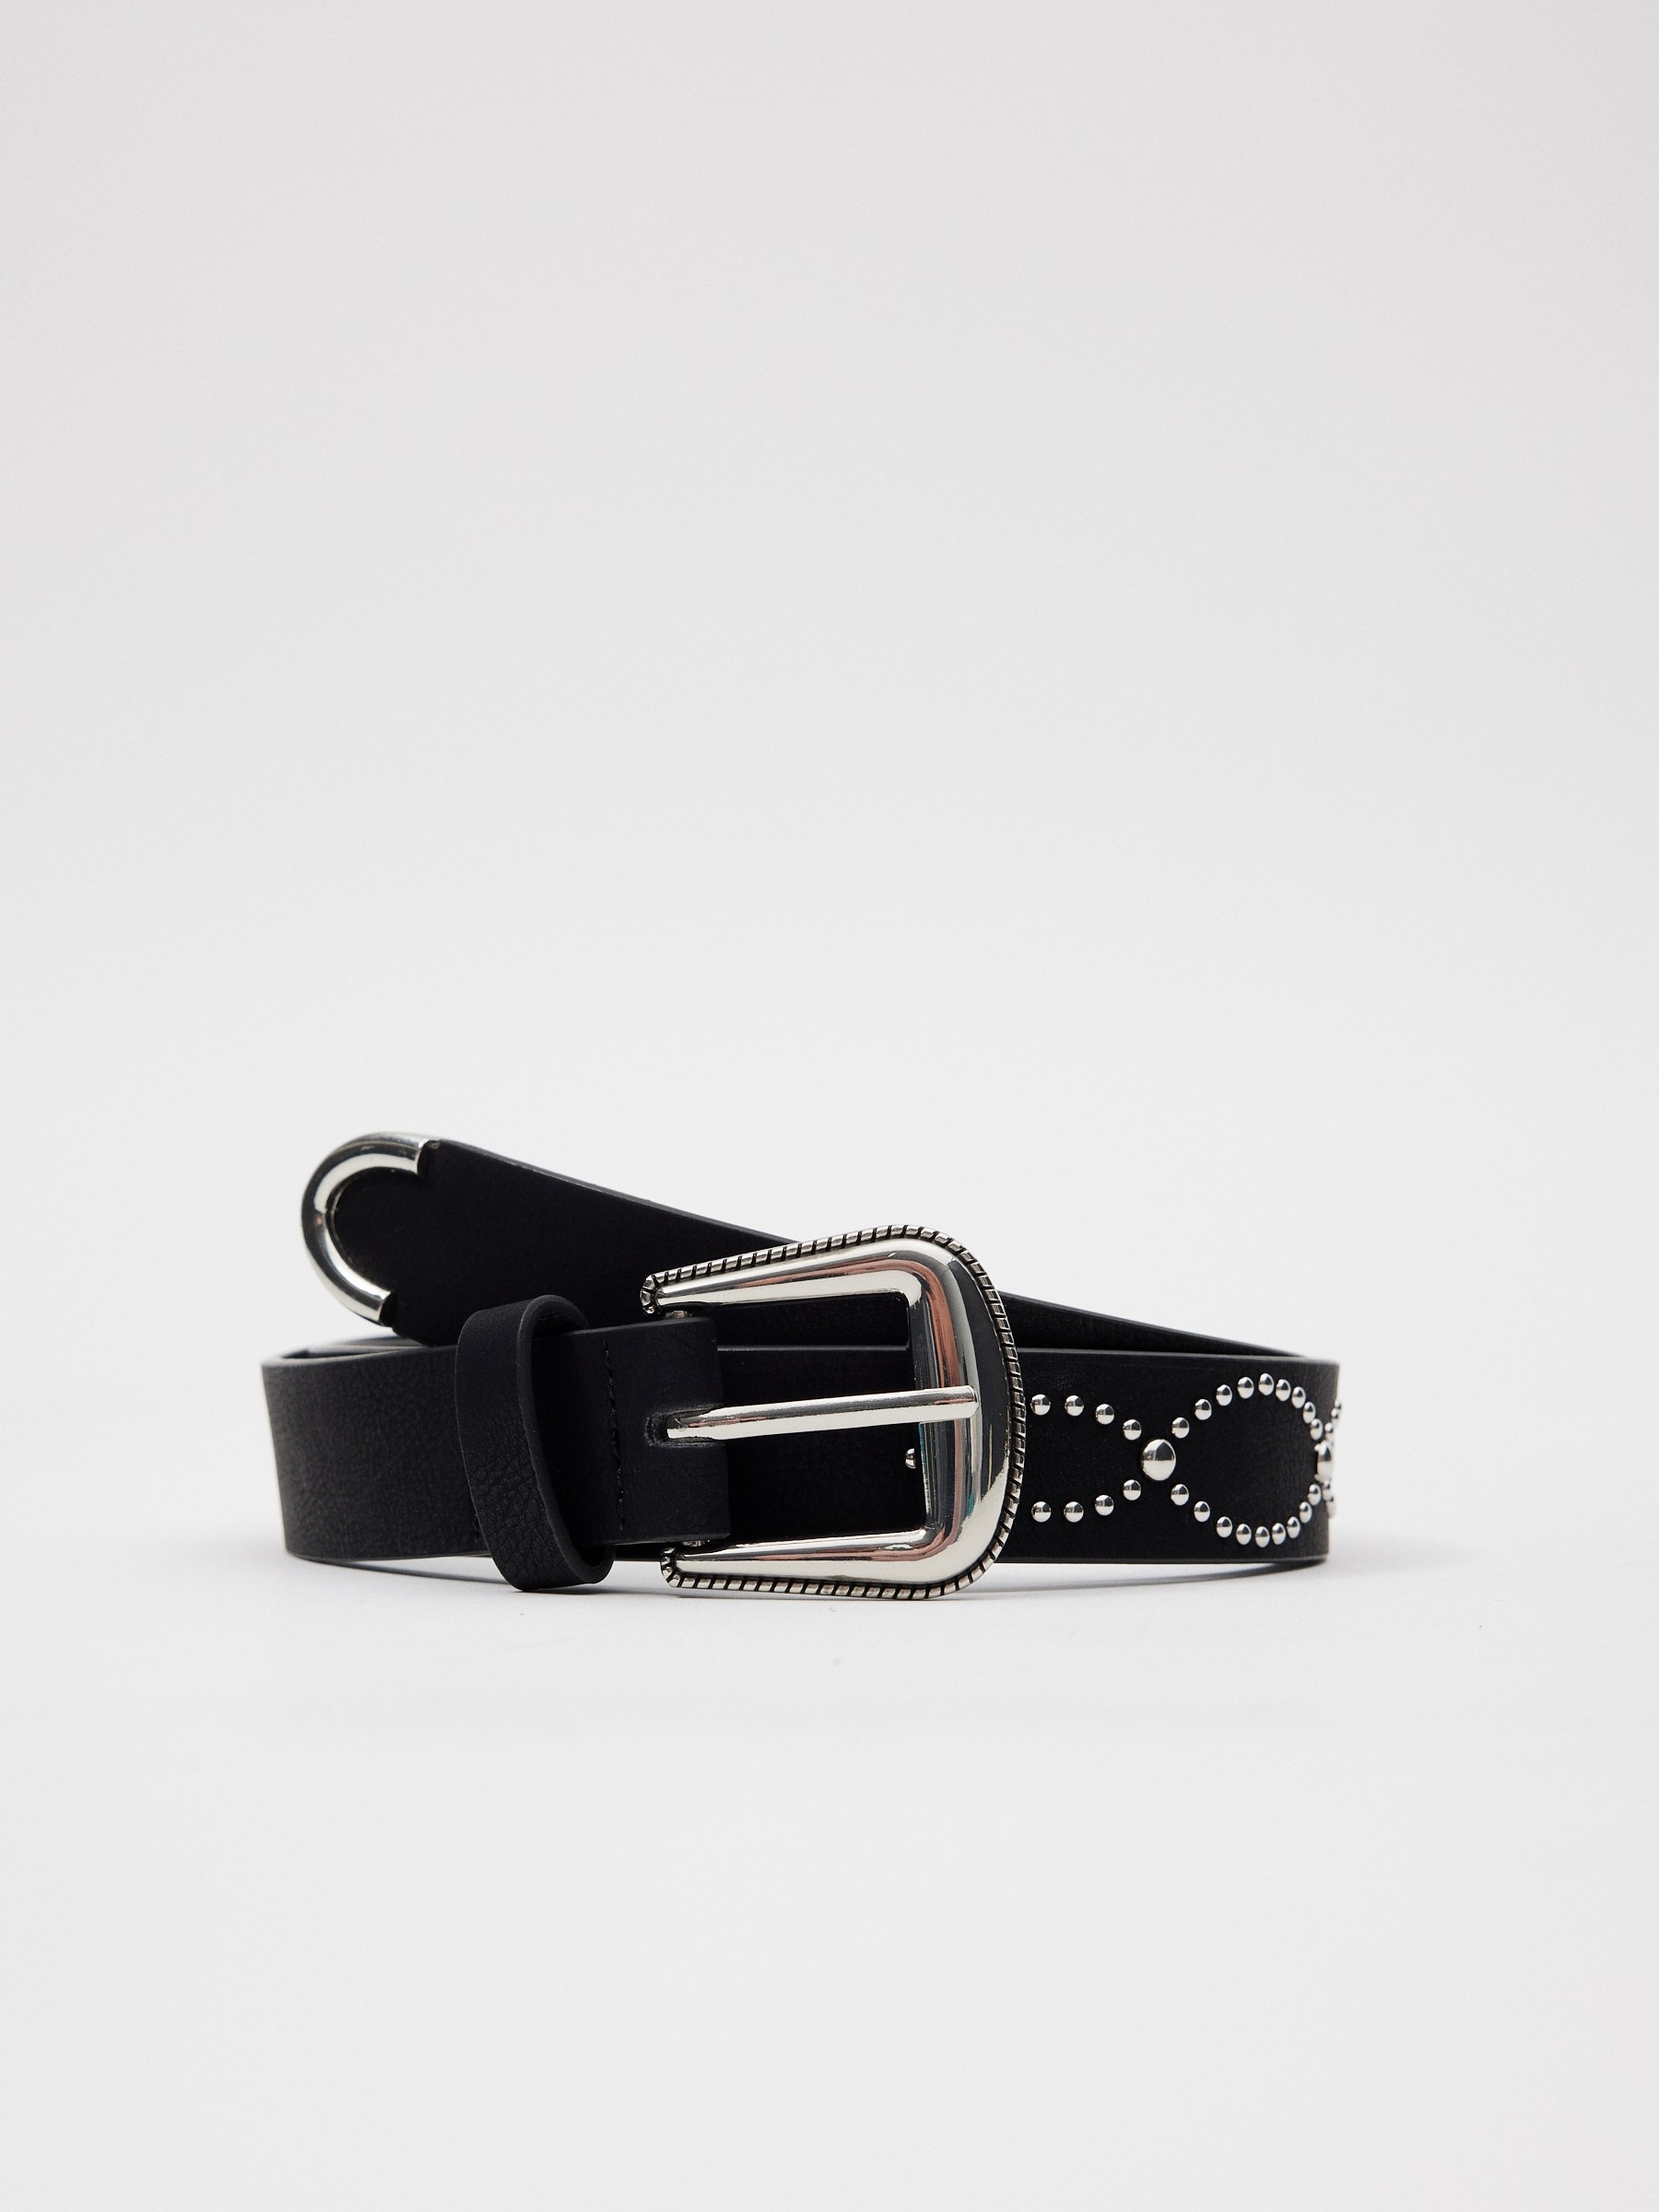 Cinturones Mujer · Comprar online en Trendz